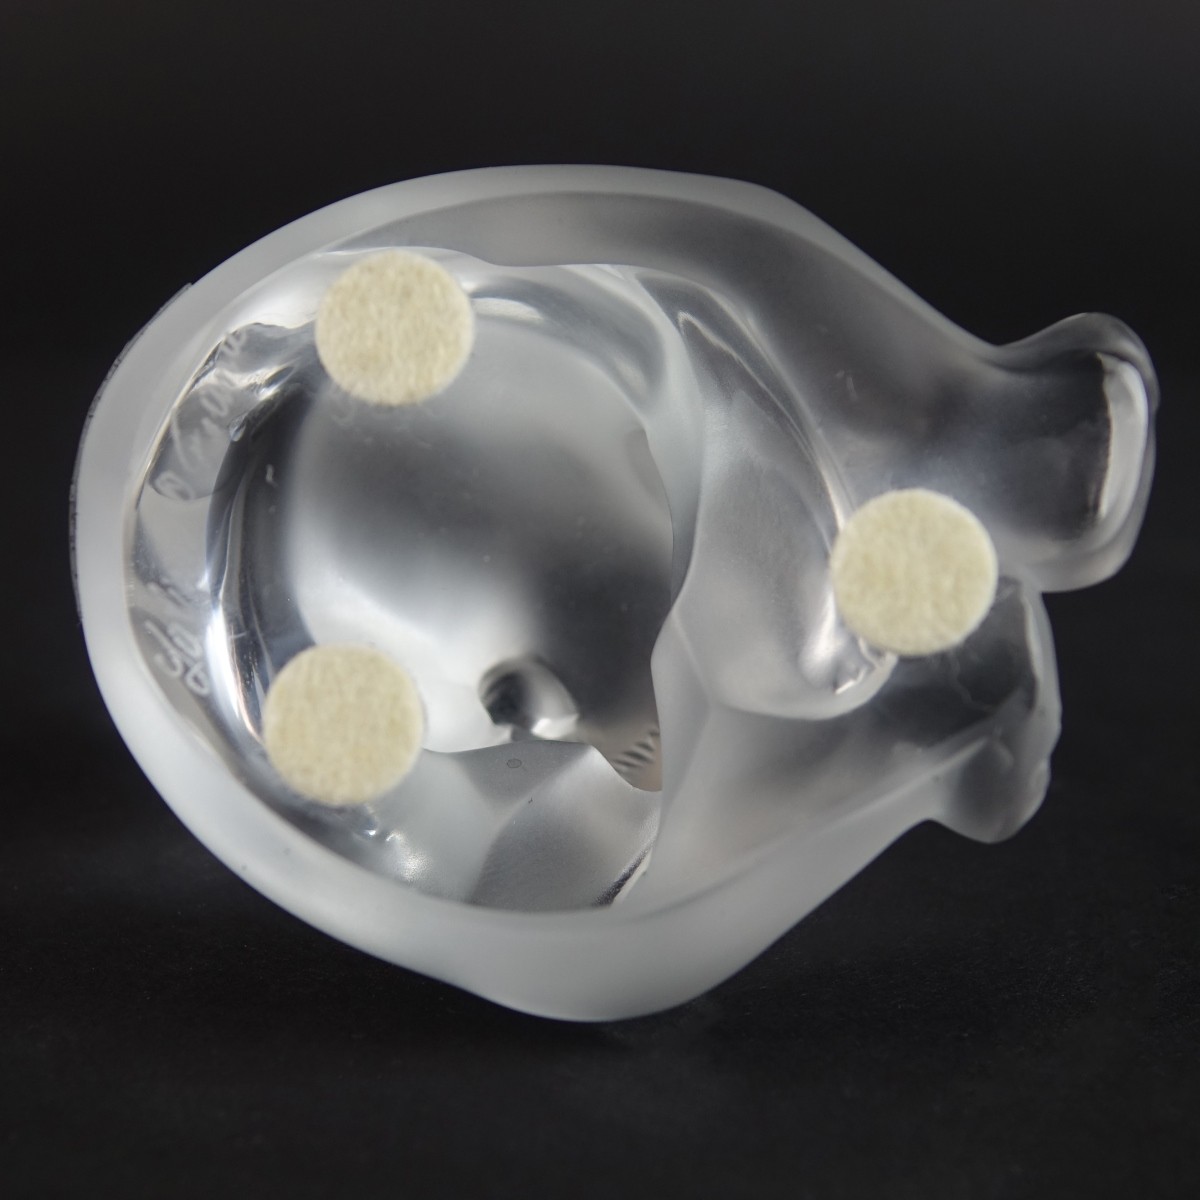 Lalique "Panda" Crystal Figurine